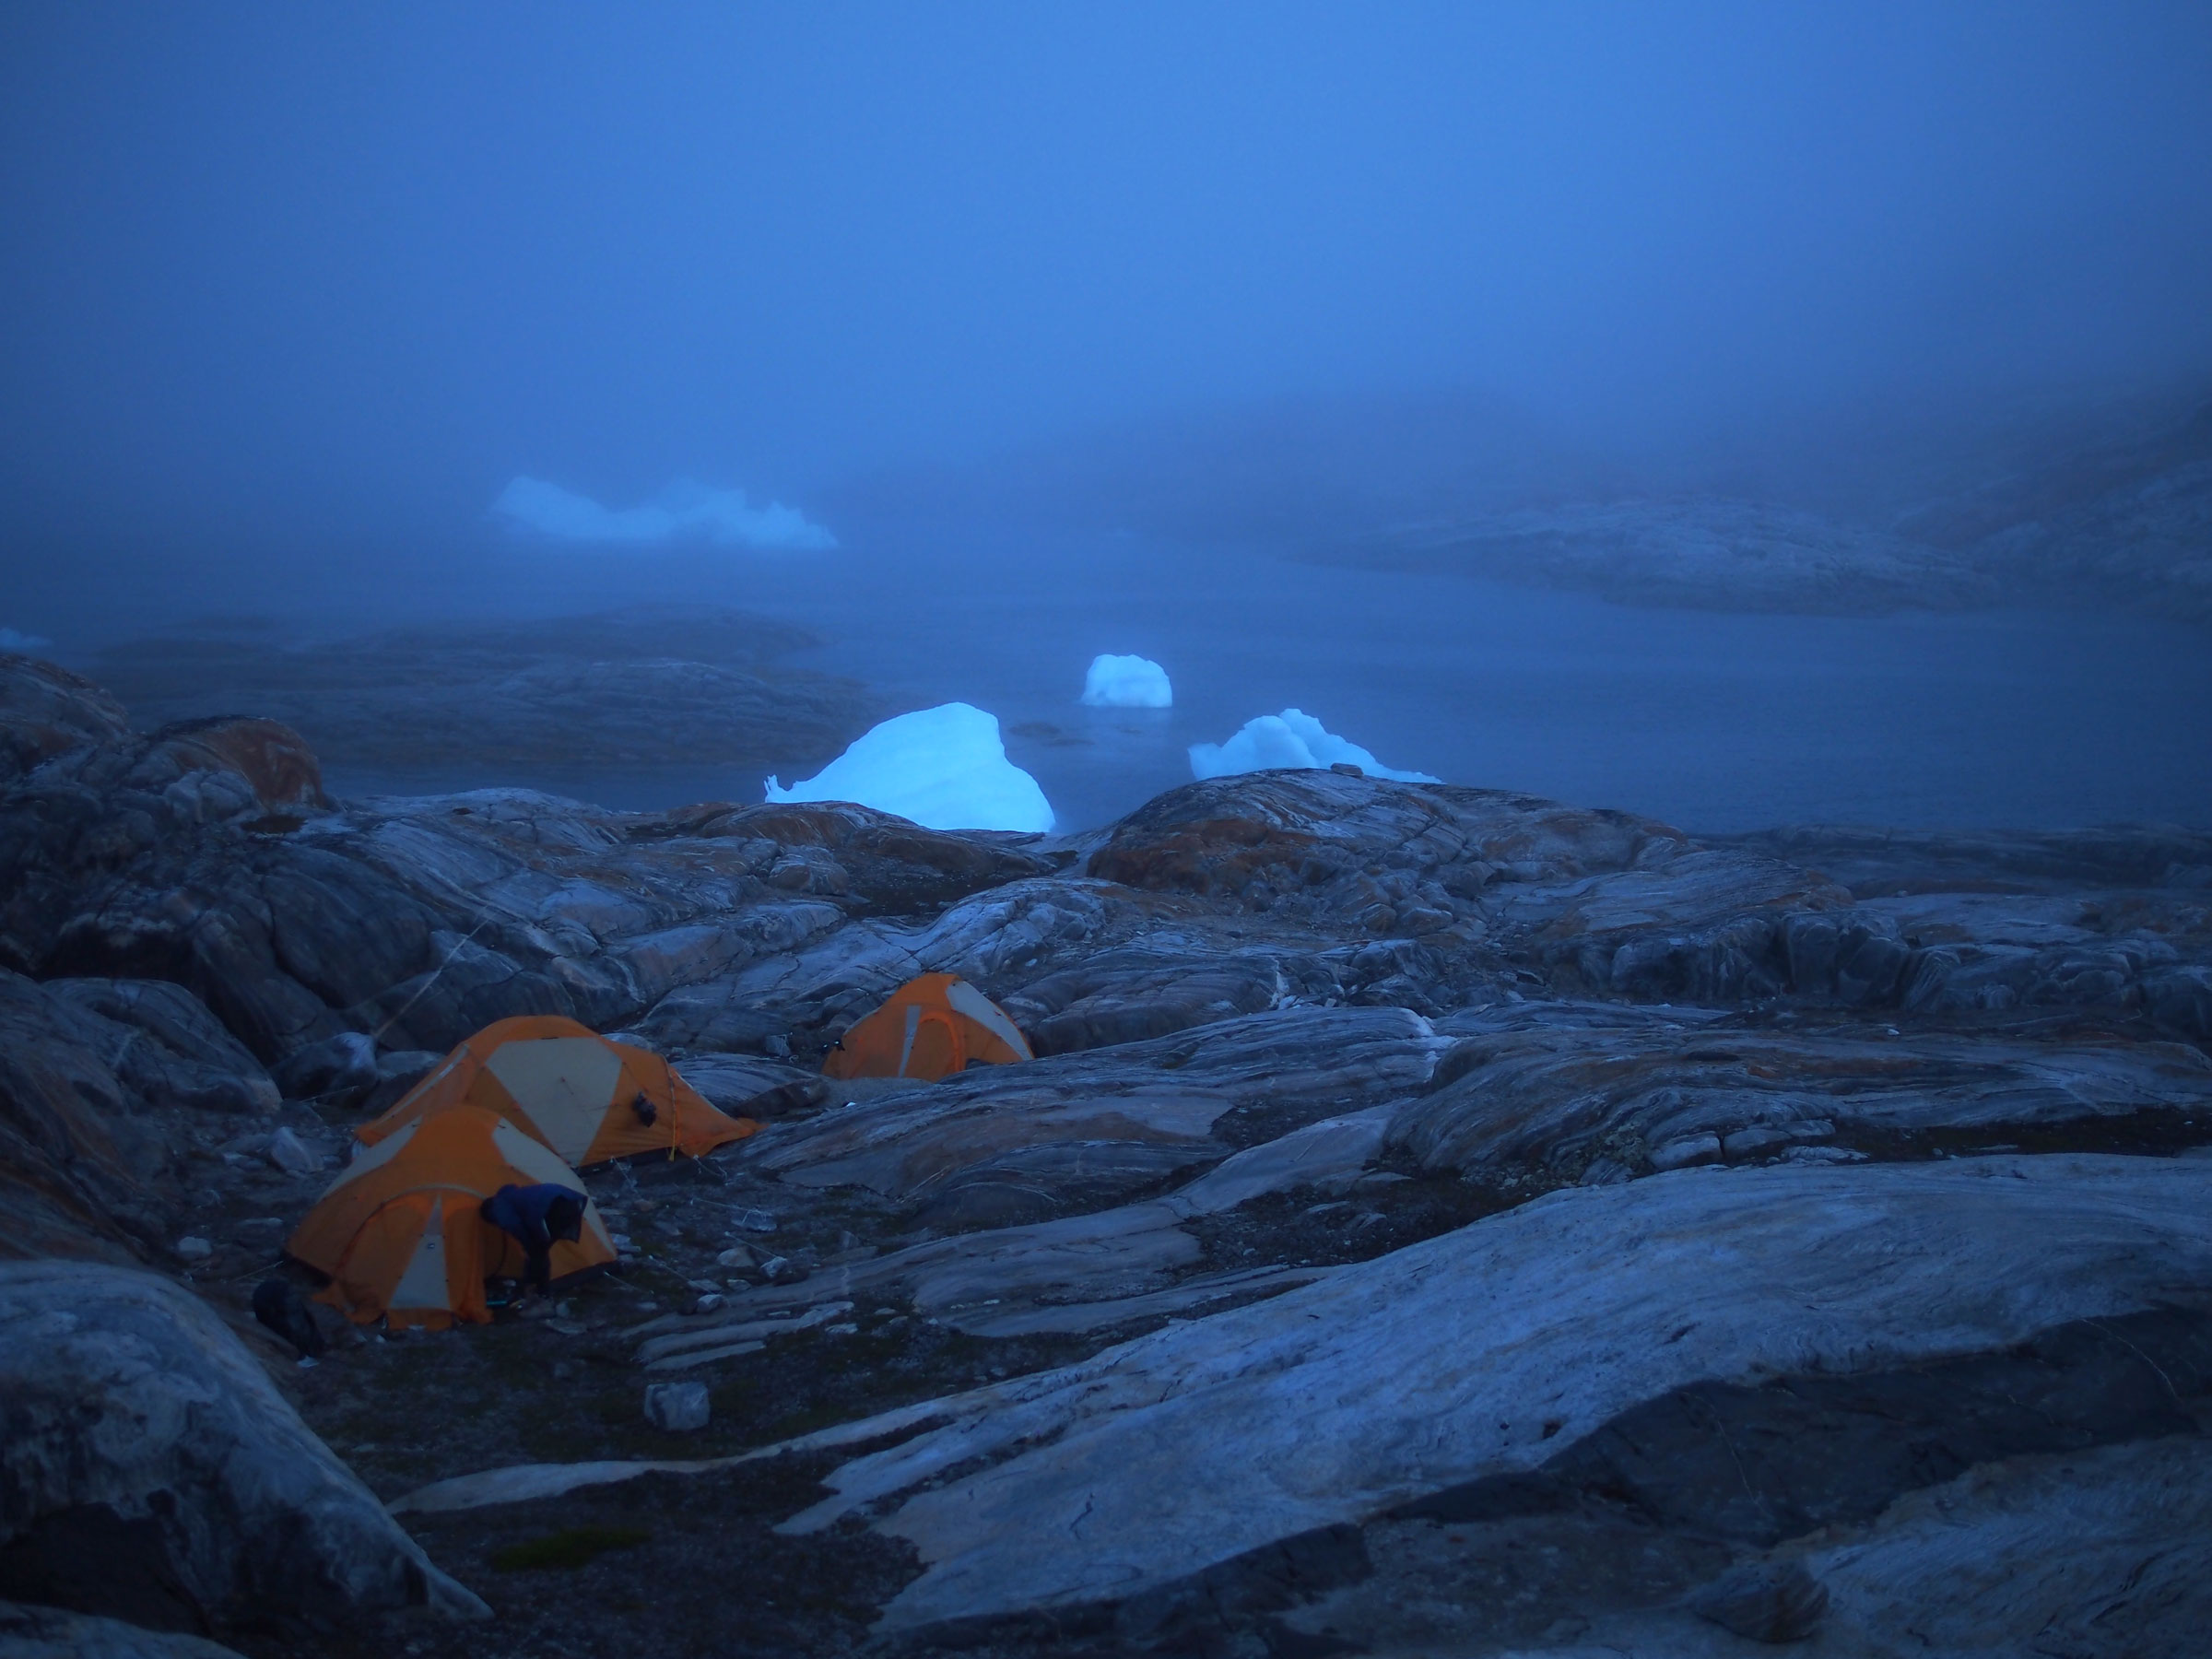 camp-night-311121.jpg - JPEG - 433.4 ko - 2400×1800 px